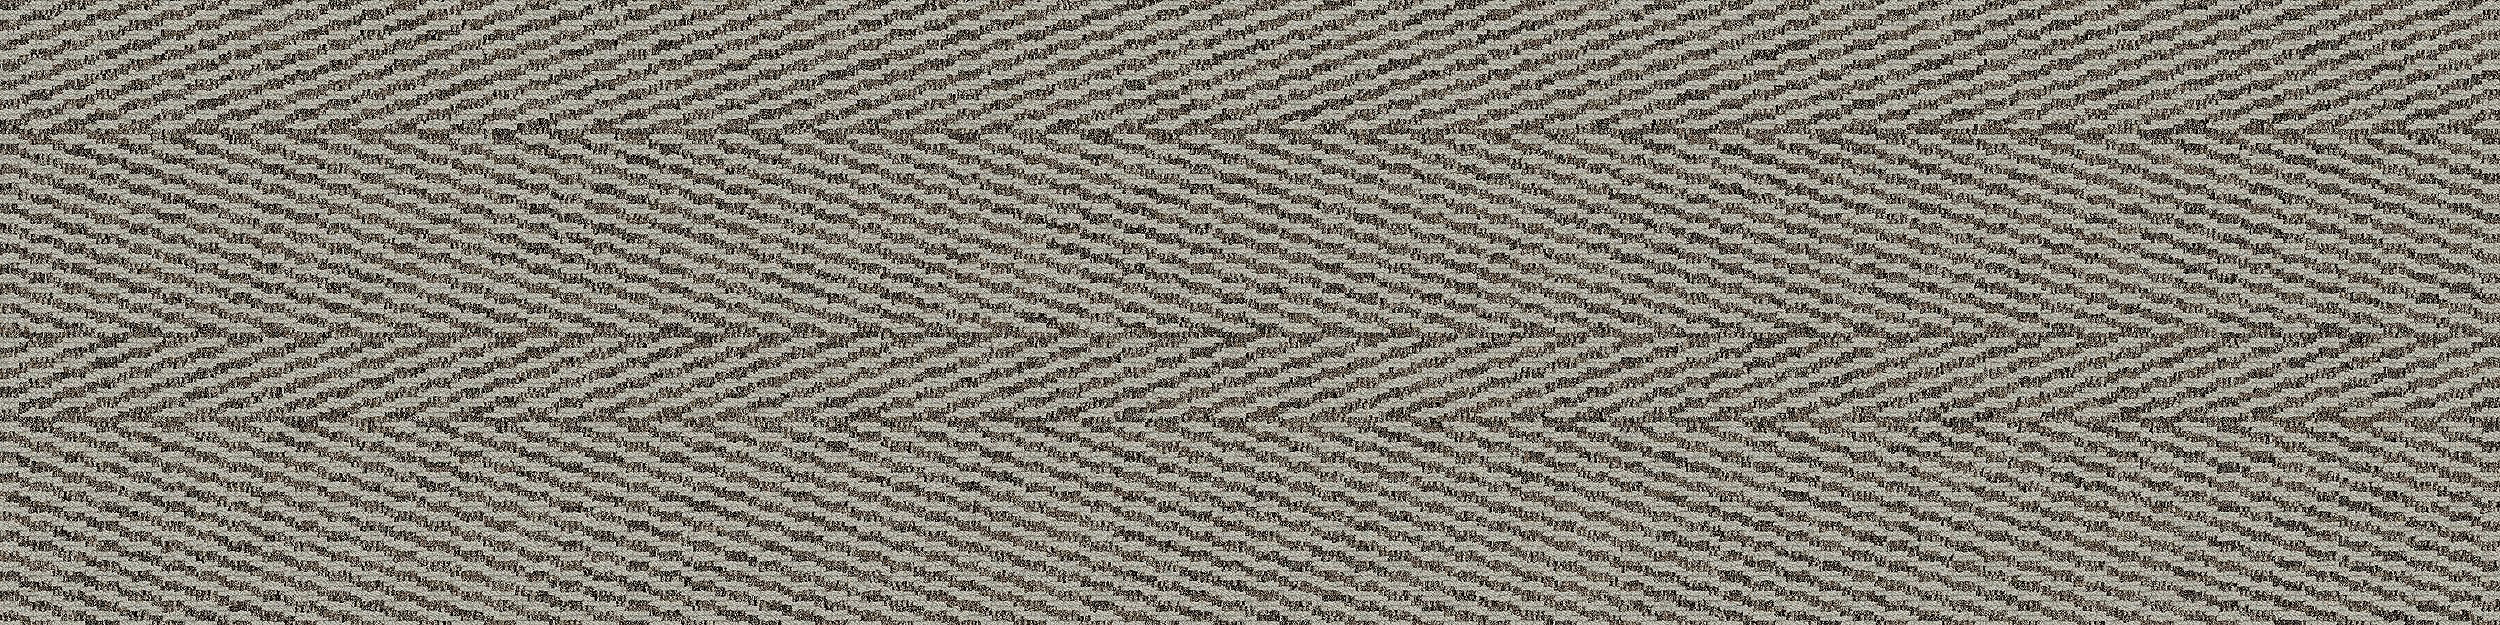 Stitch In Time Carpet Tile In Linen Stitch imagen número 6